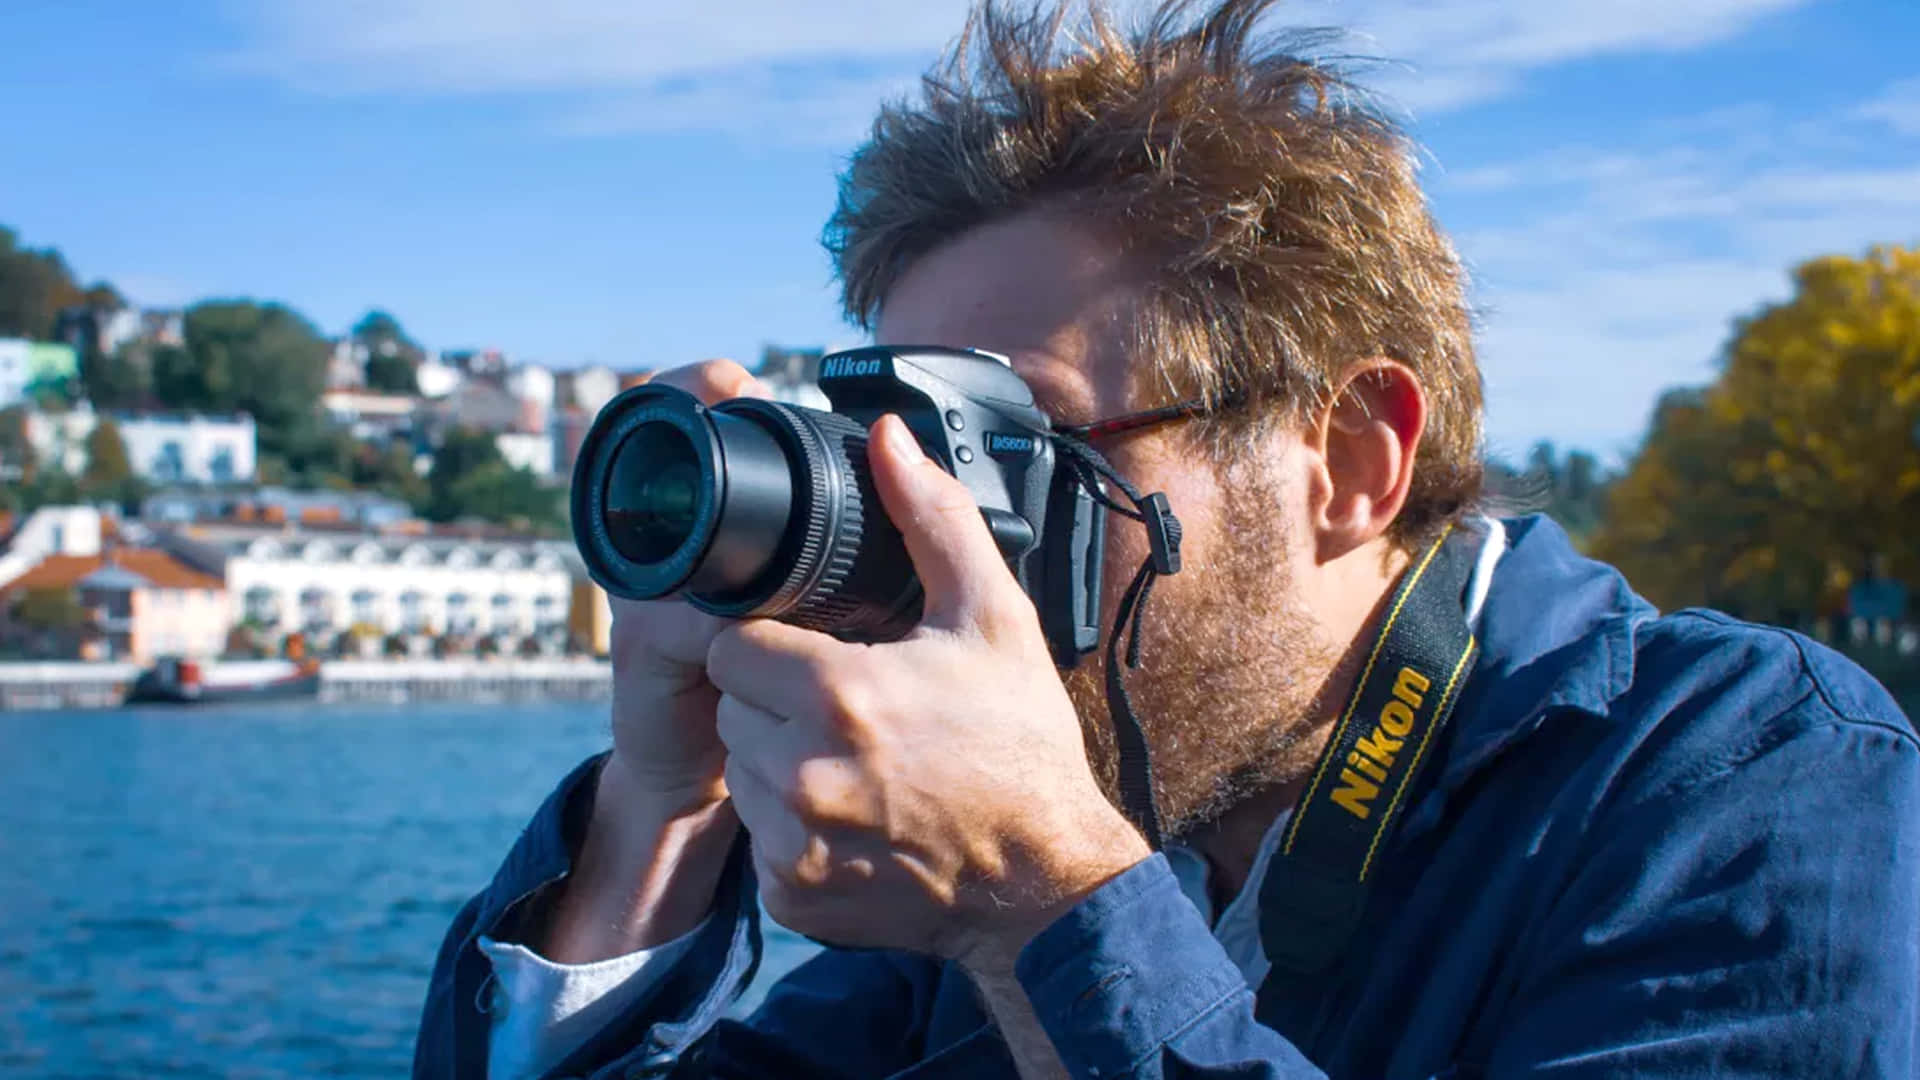 Professional Photographers Use DSLR Cameras to Capture Life's Precious Moments